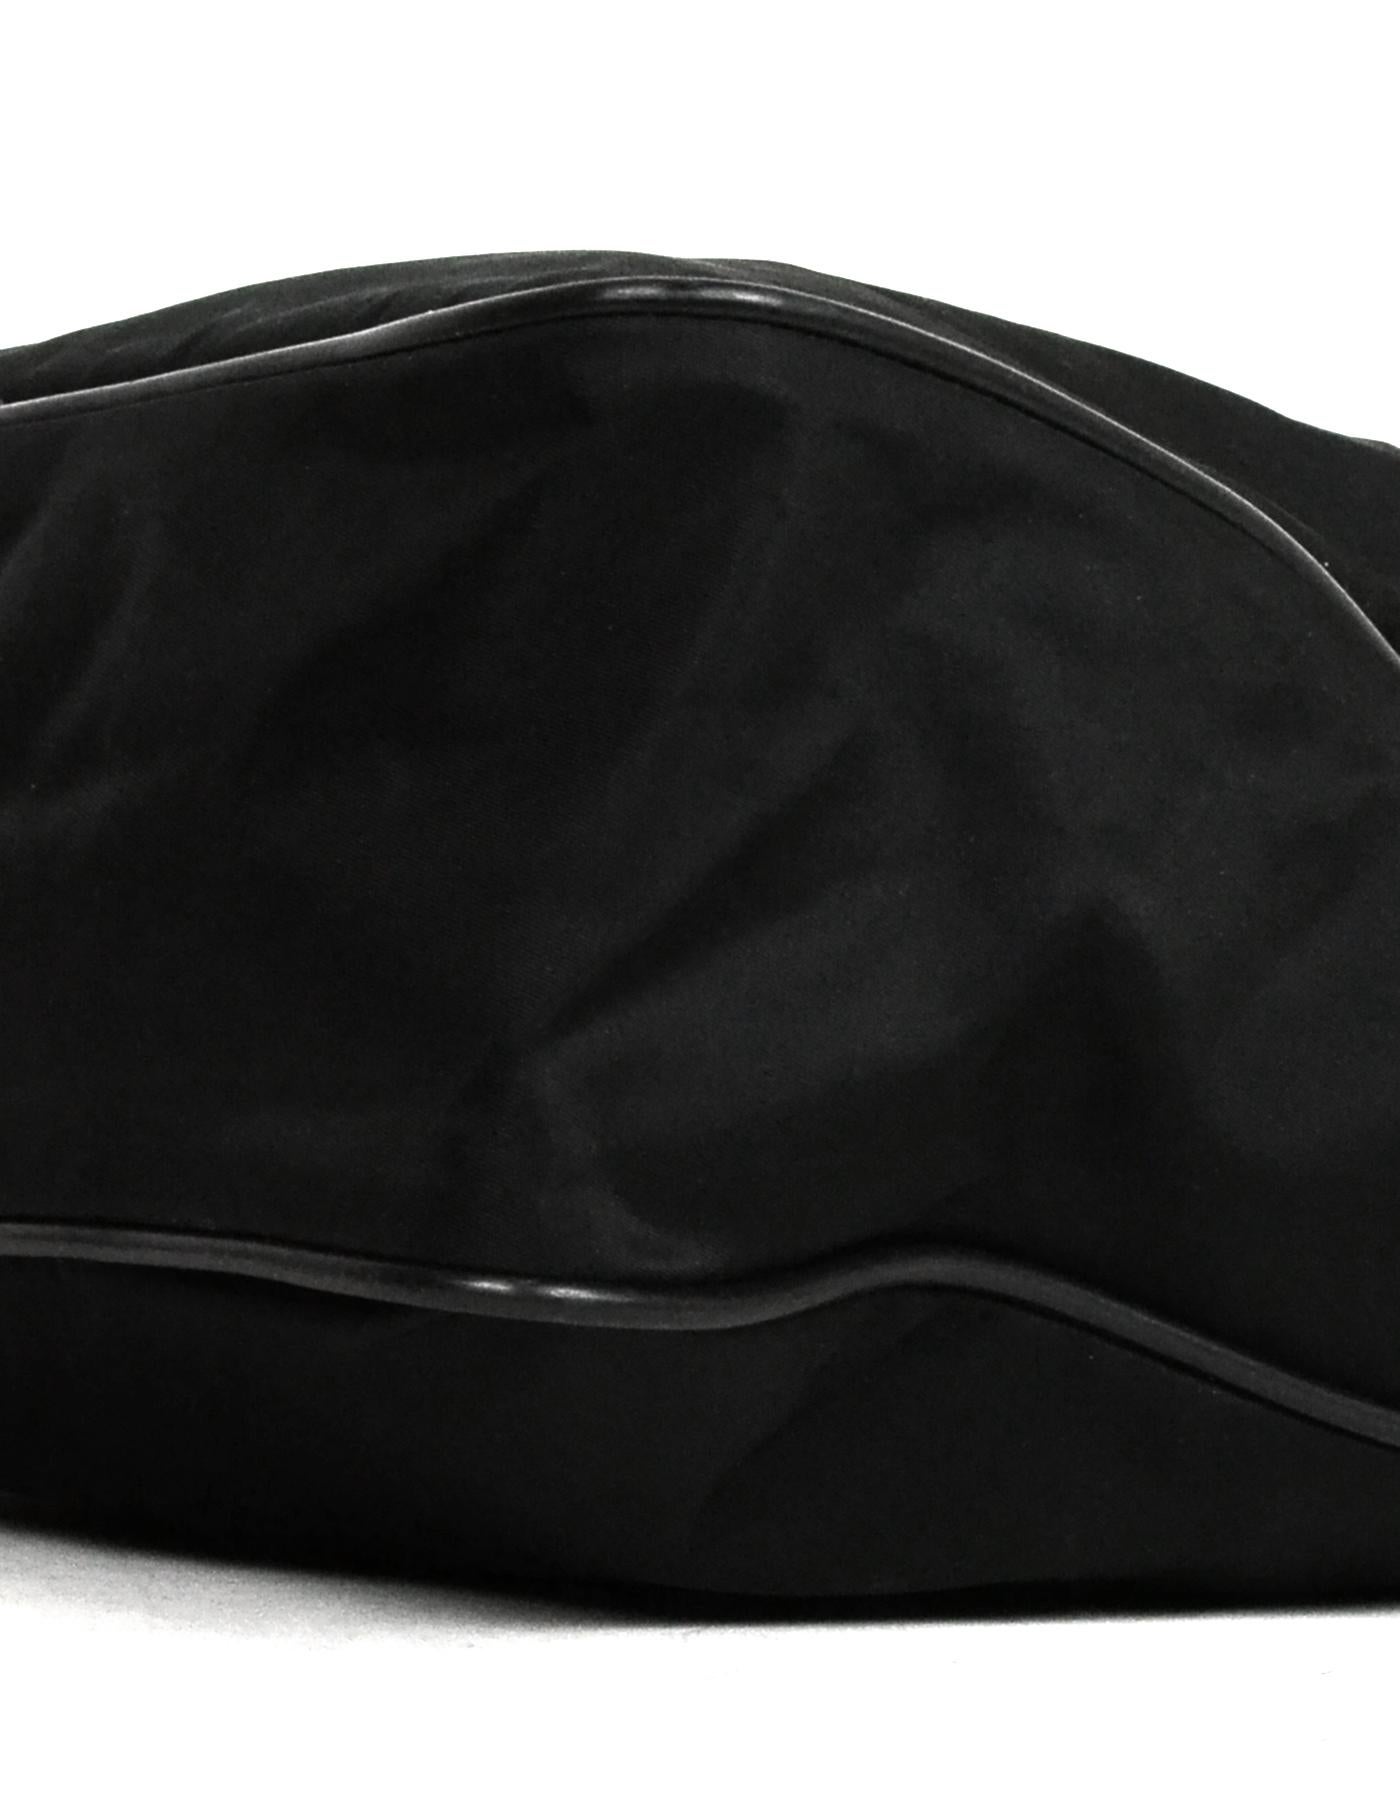 Prada Black Nylon Zip Top Messenger Bag 1